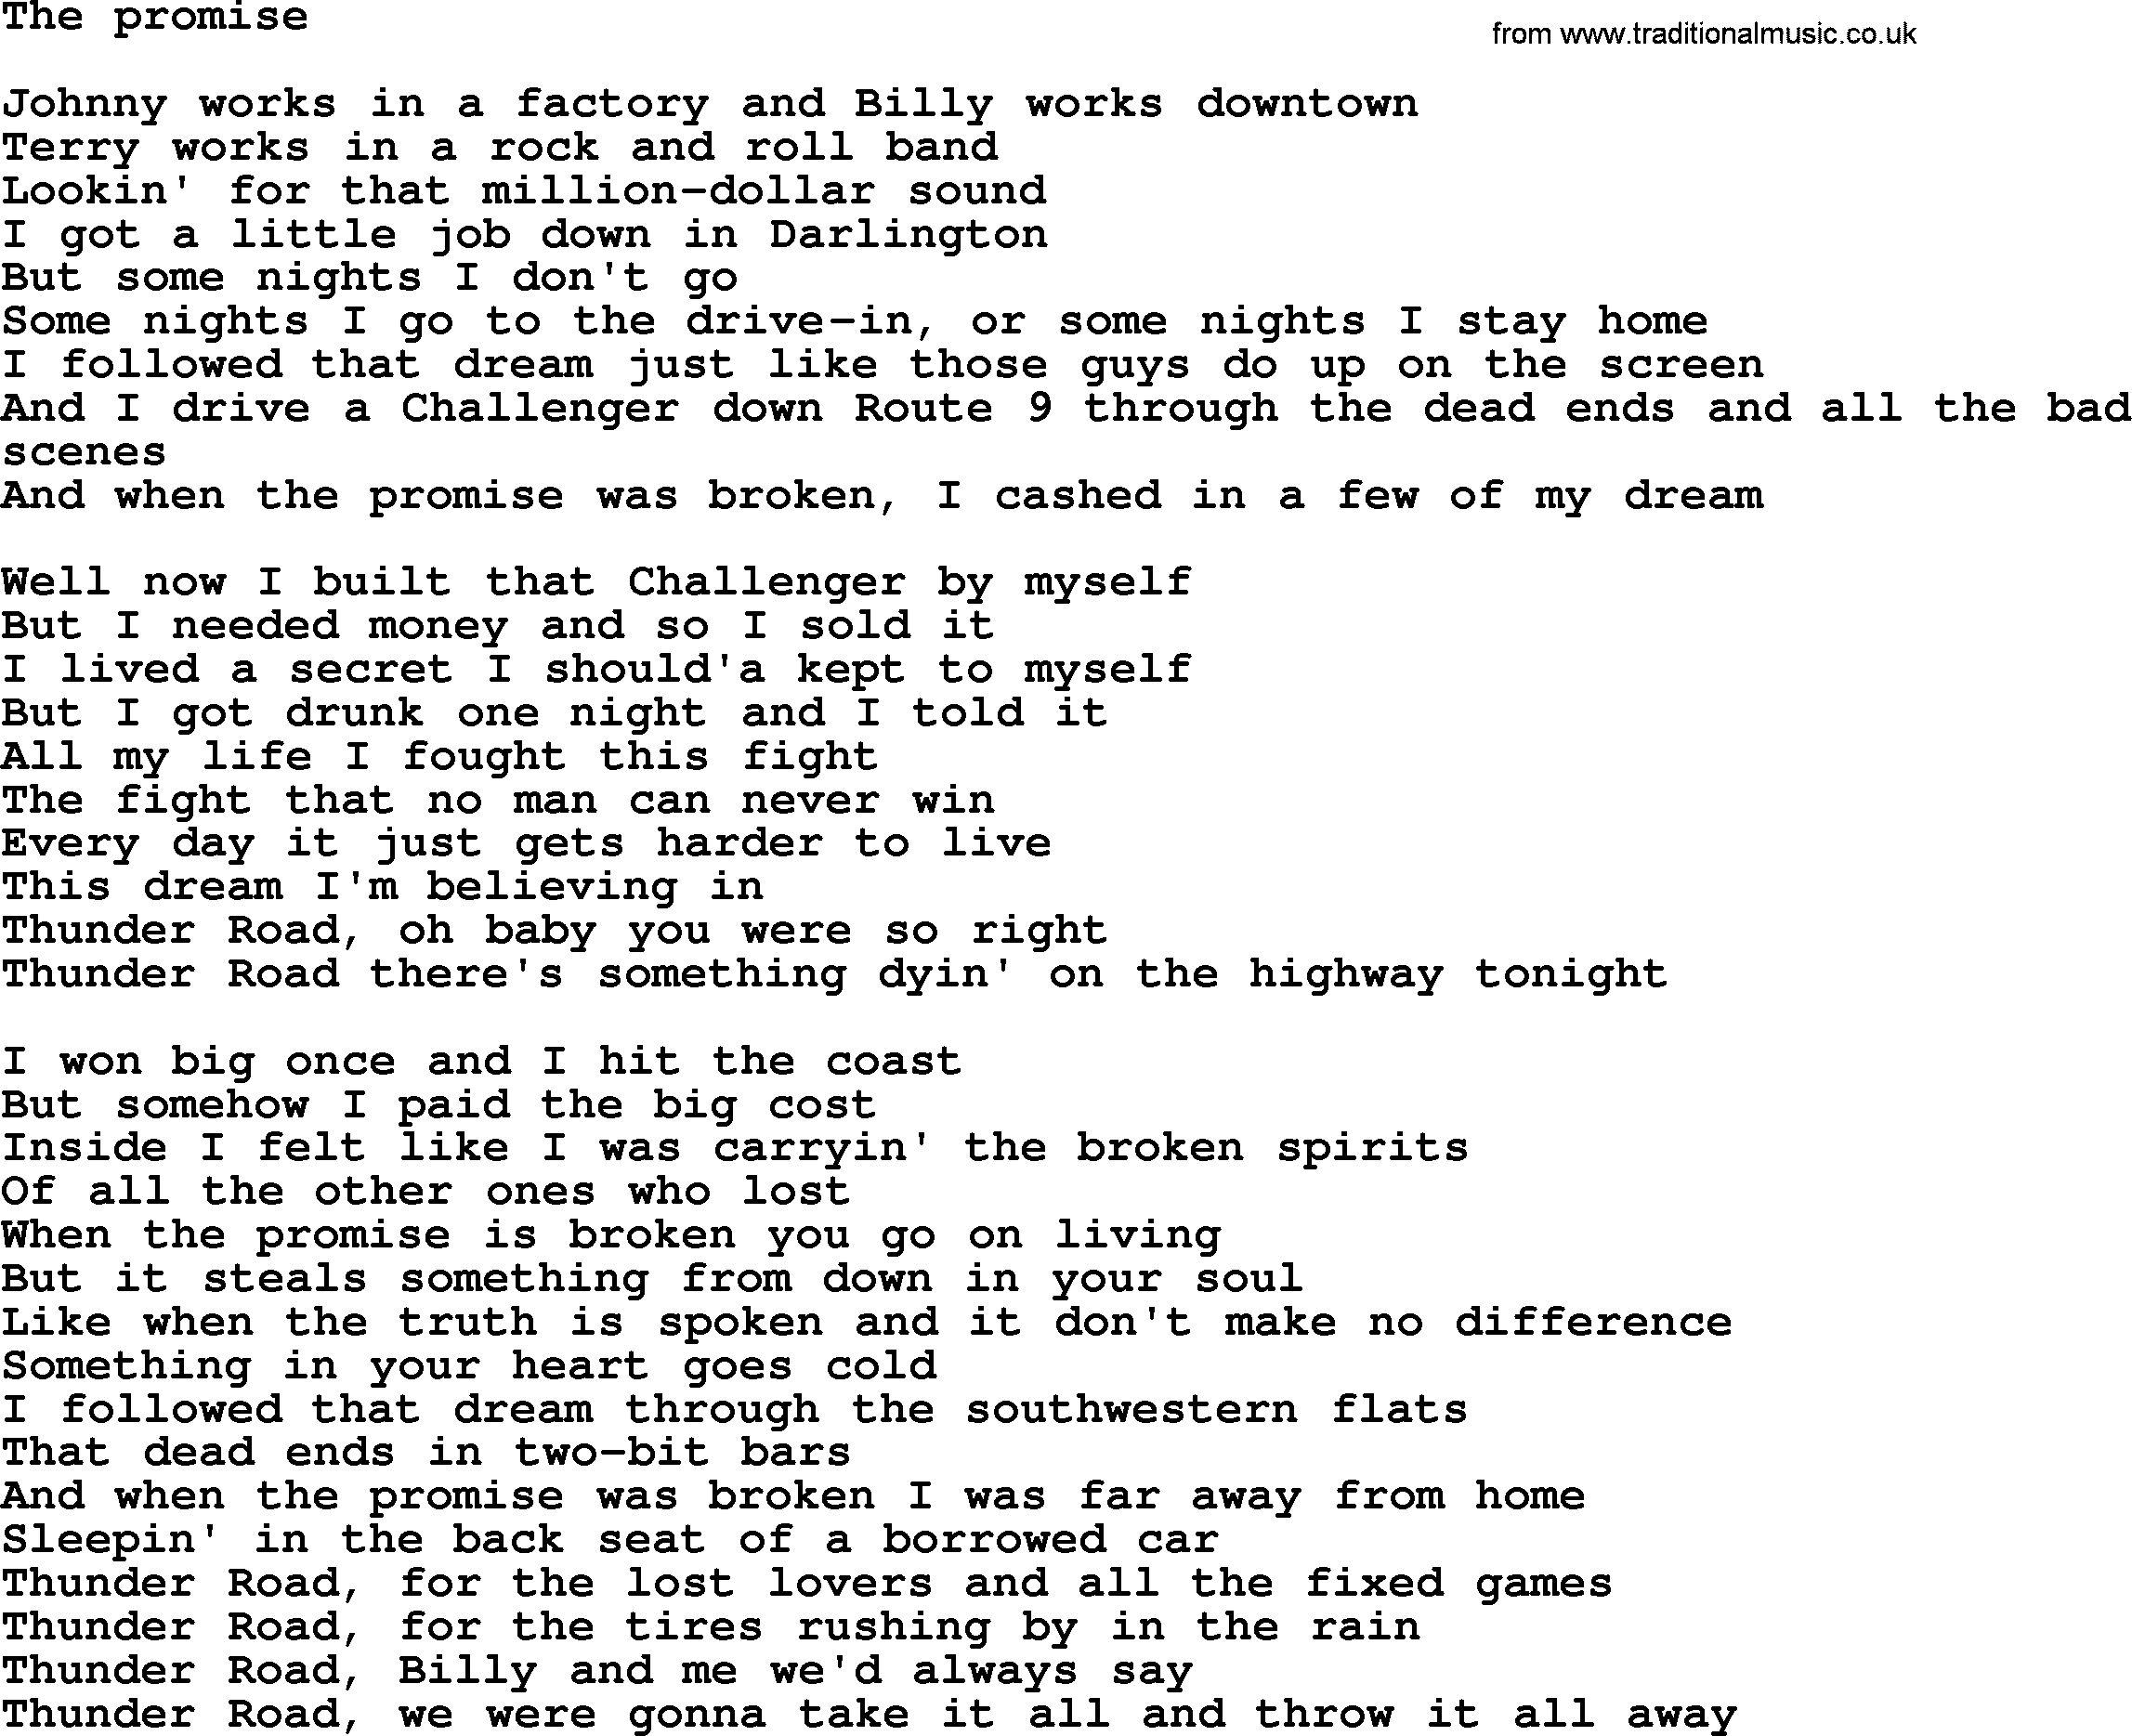 Bruce Springsteen song: The Promise lyrics